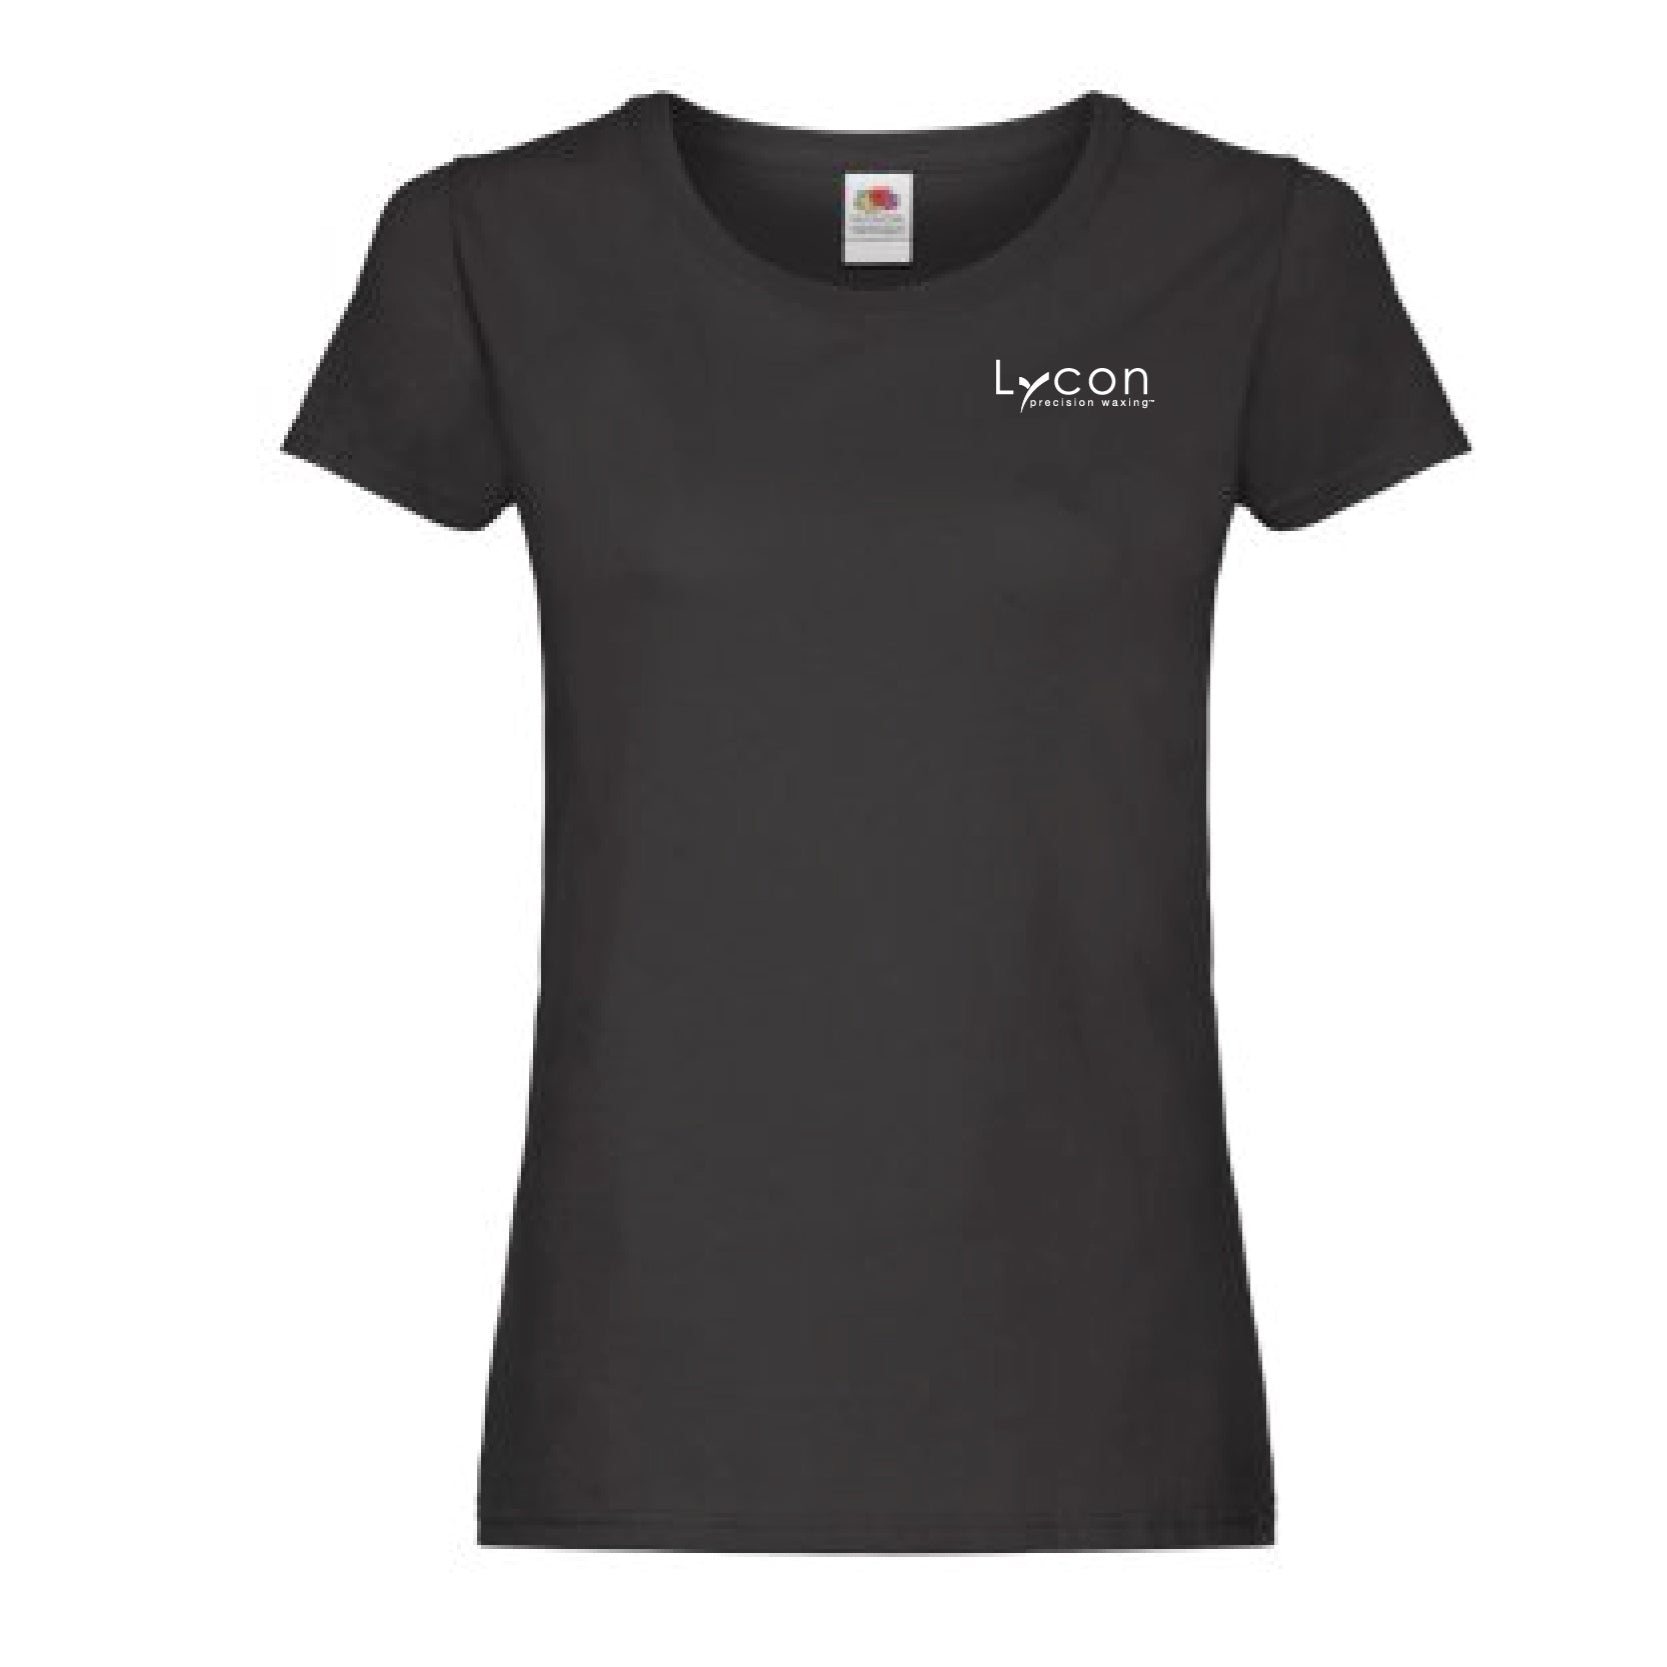 XL - LYCON Waxing Expert T-Shirt